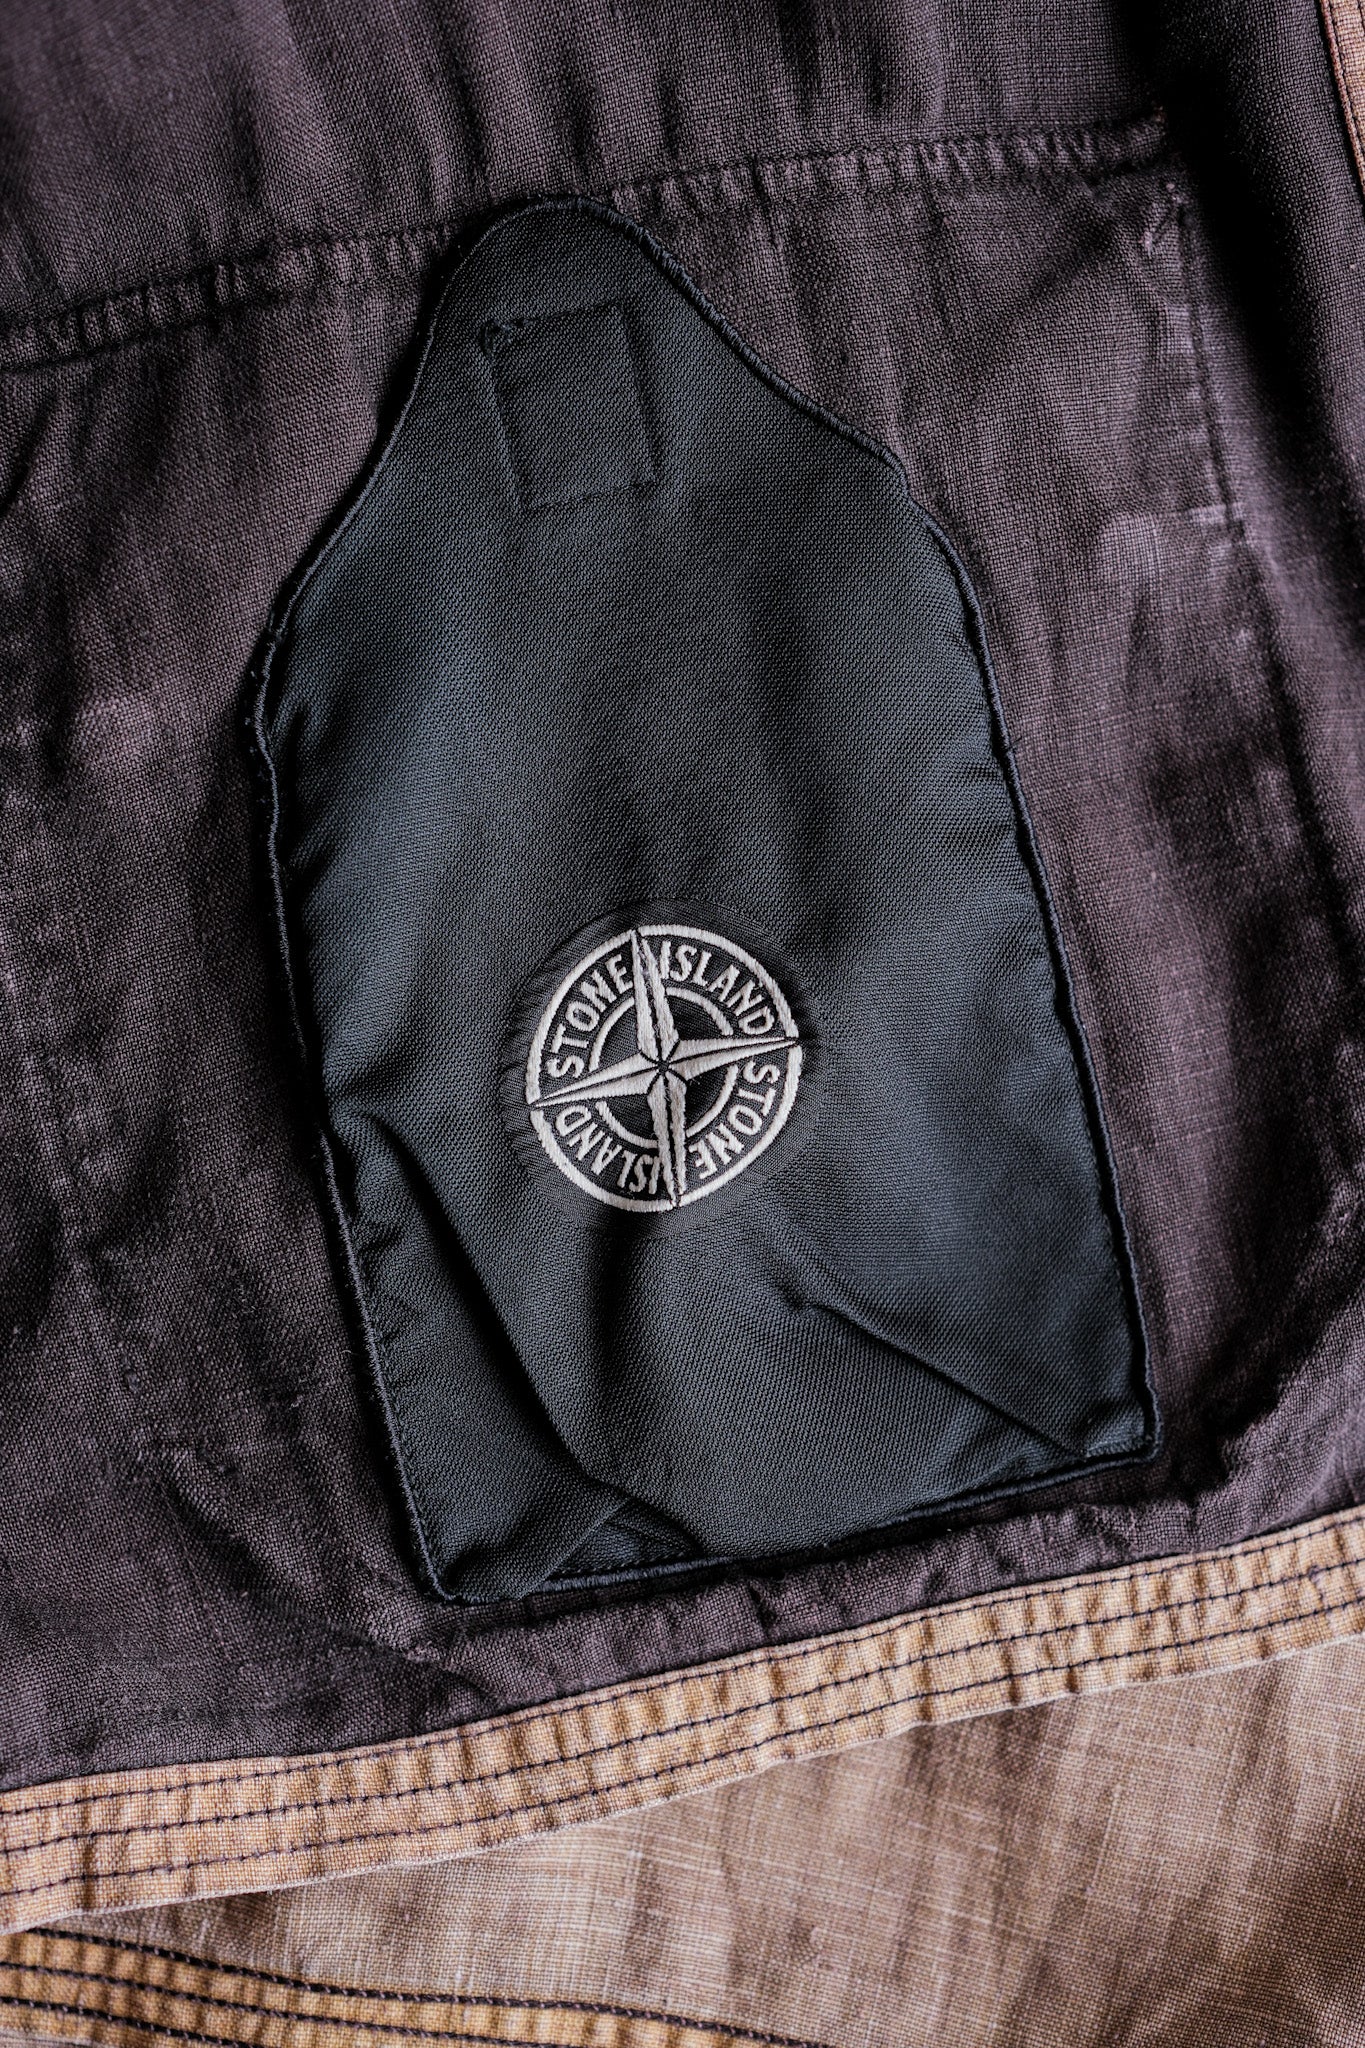 [97SS]舊石島服裝染色Lino亞麻棉夾克尺寸。L“綠色邊緣”